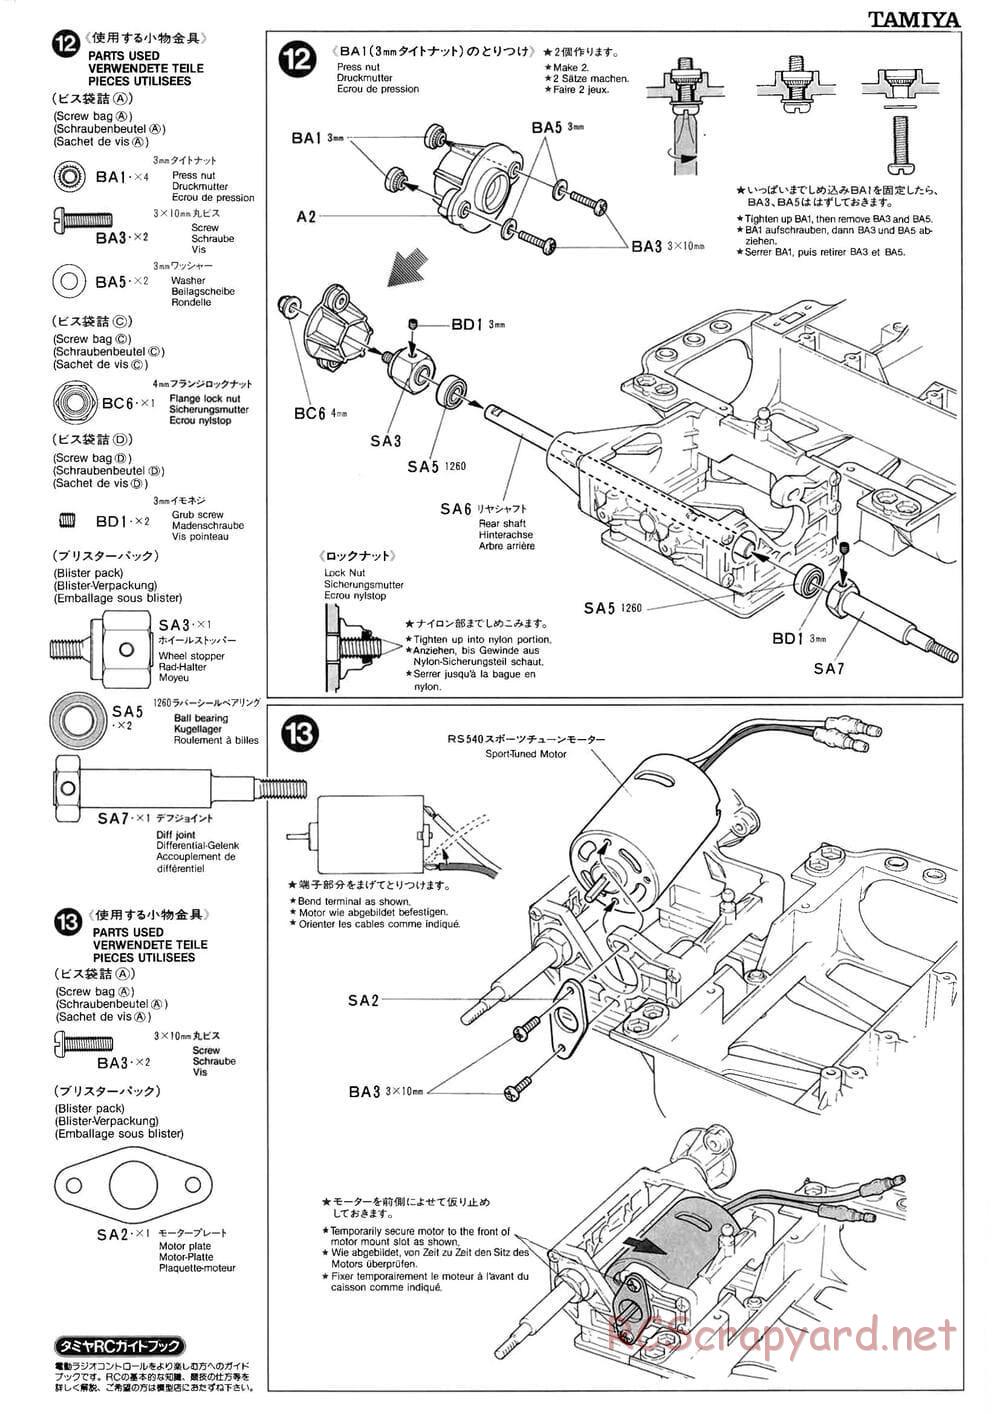 Tamiya - Group-C Chassis - Manual - Page 9